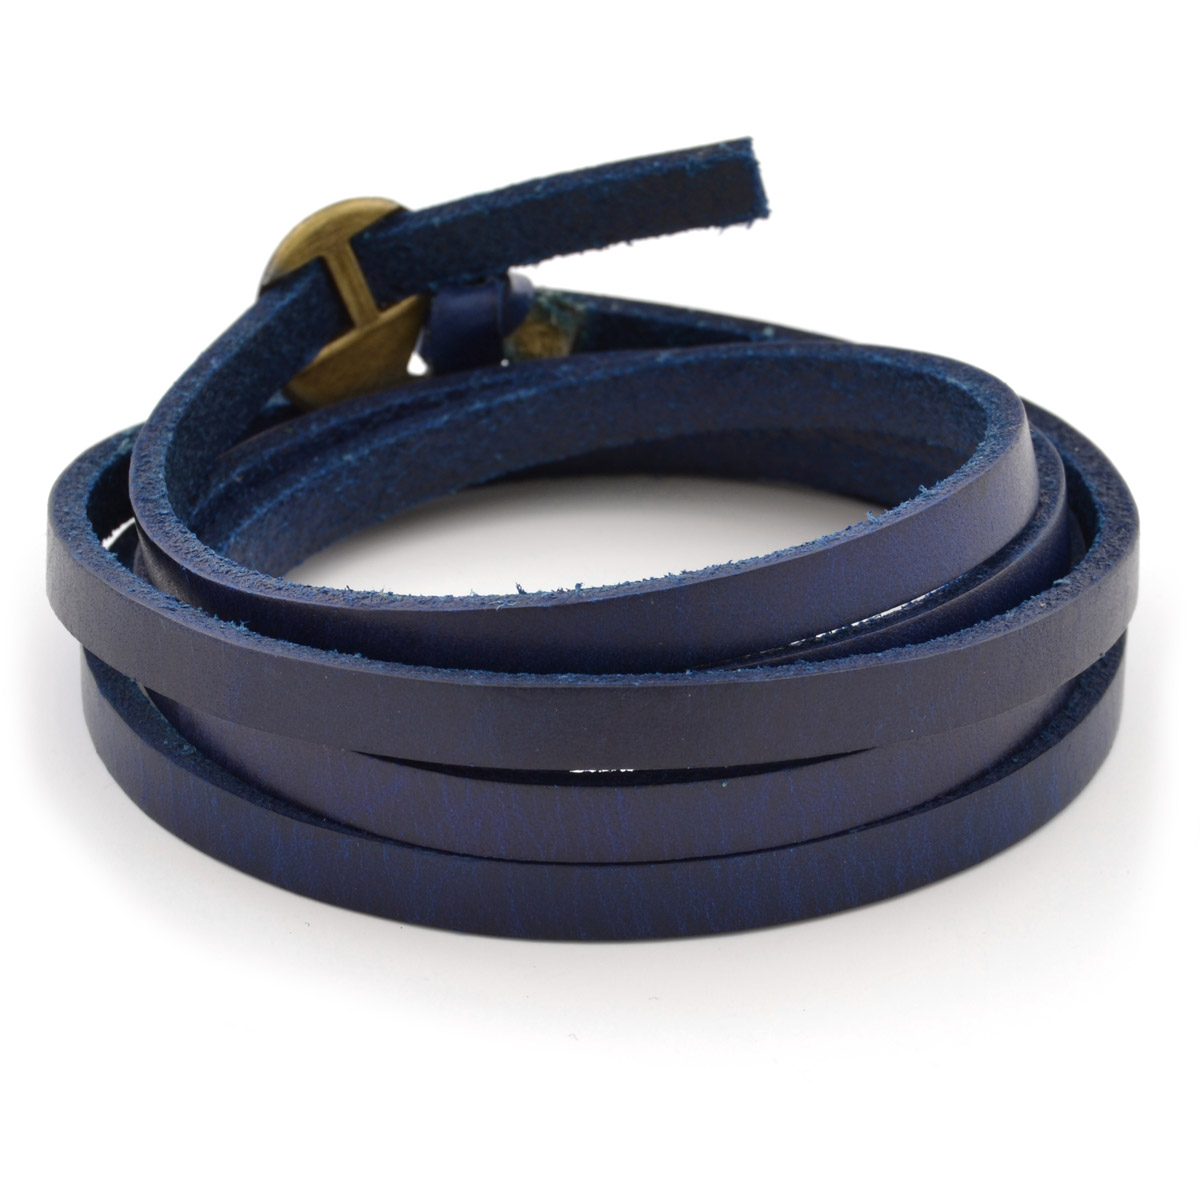 ZIVOM Braided Blue Black Leather Stainless Steel Wrist Band Bracelet Men